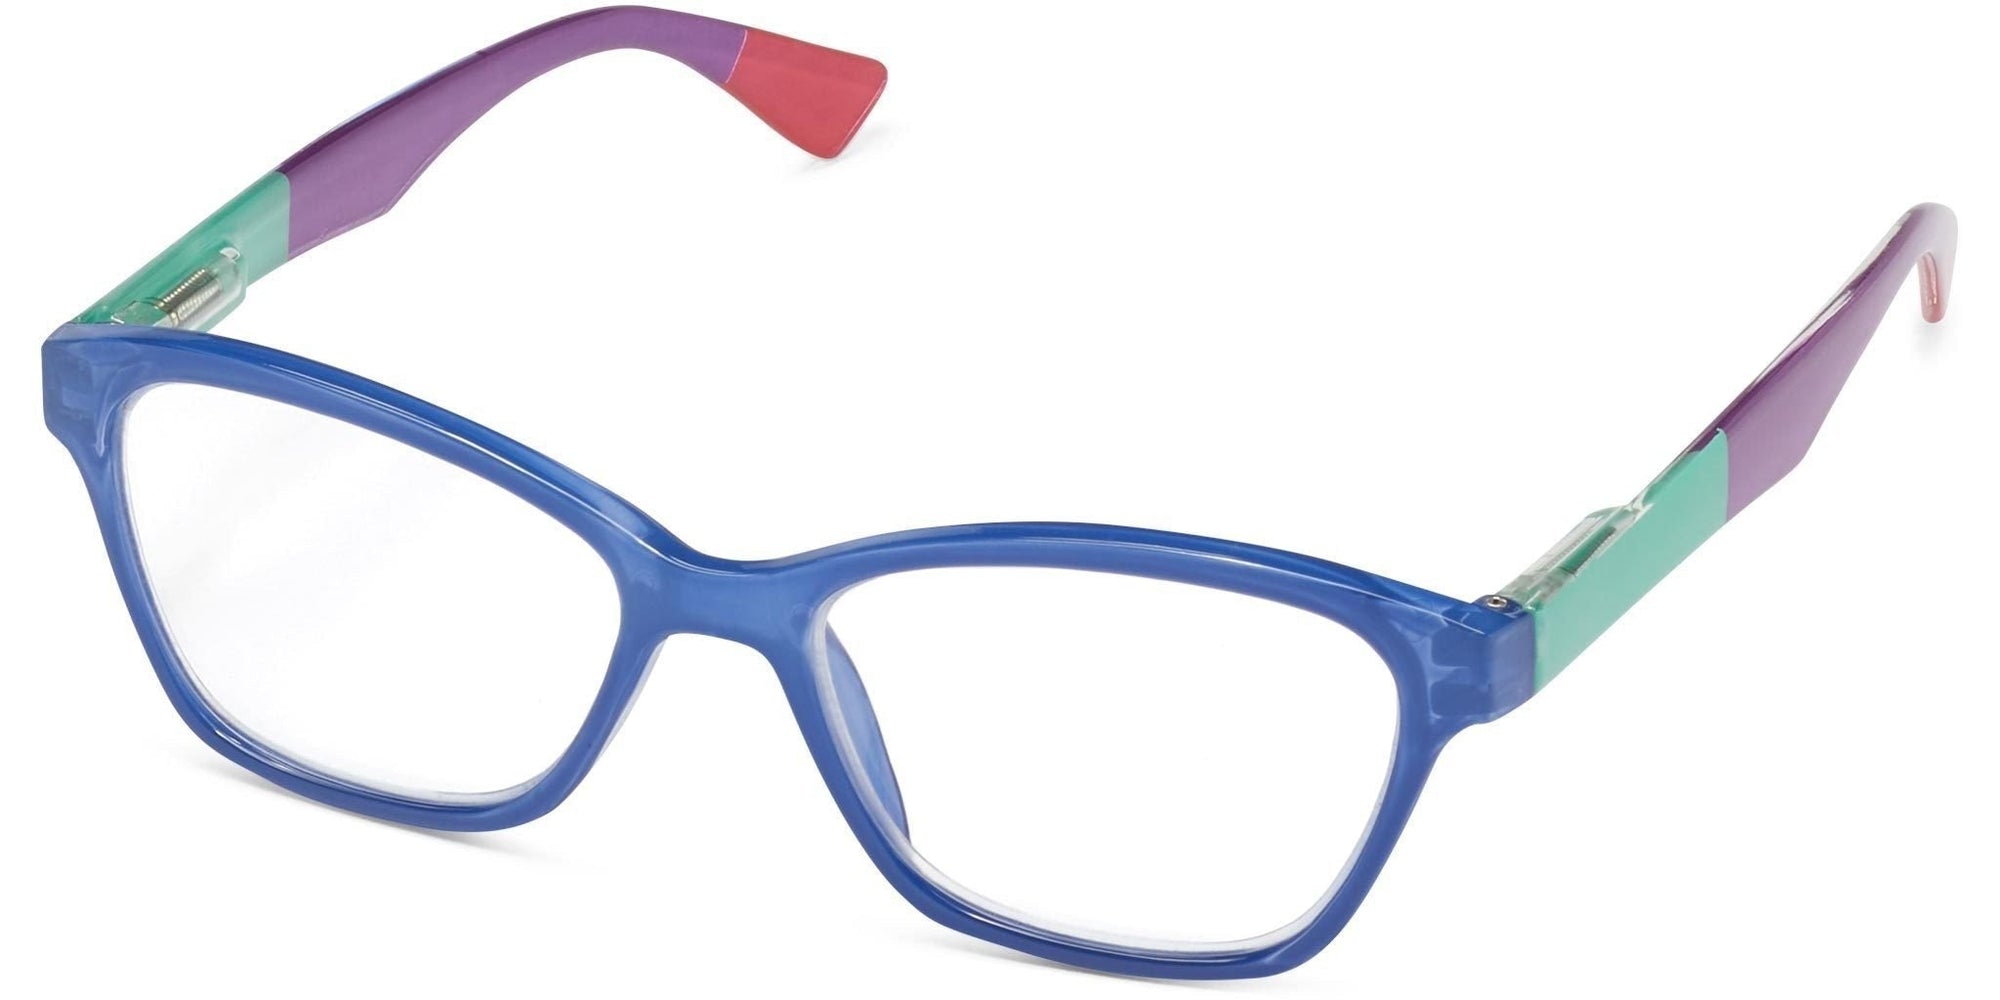 Palma - Blue/Green/Purple / 1.25 - Reading Glasses